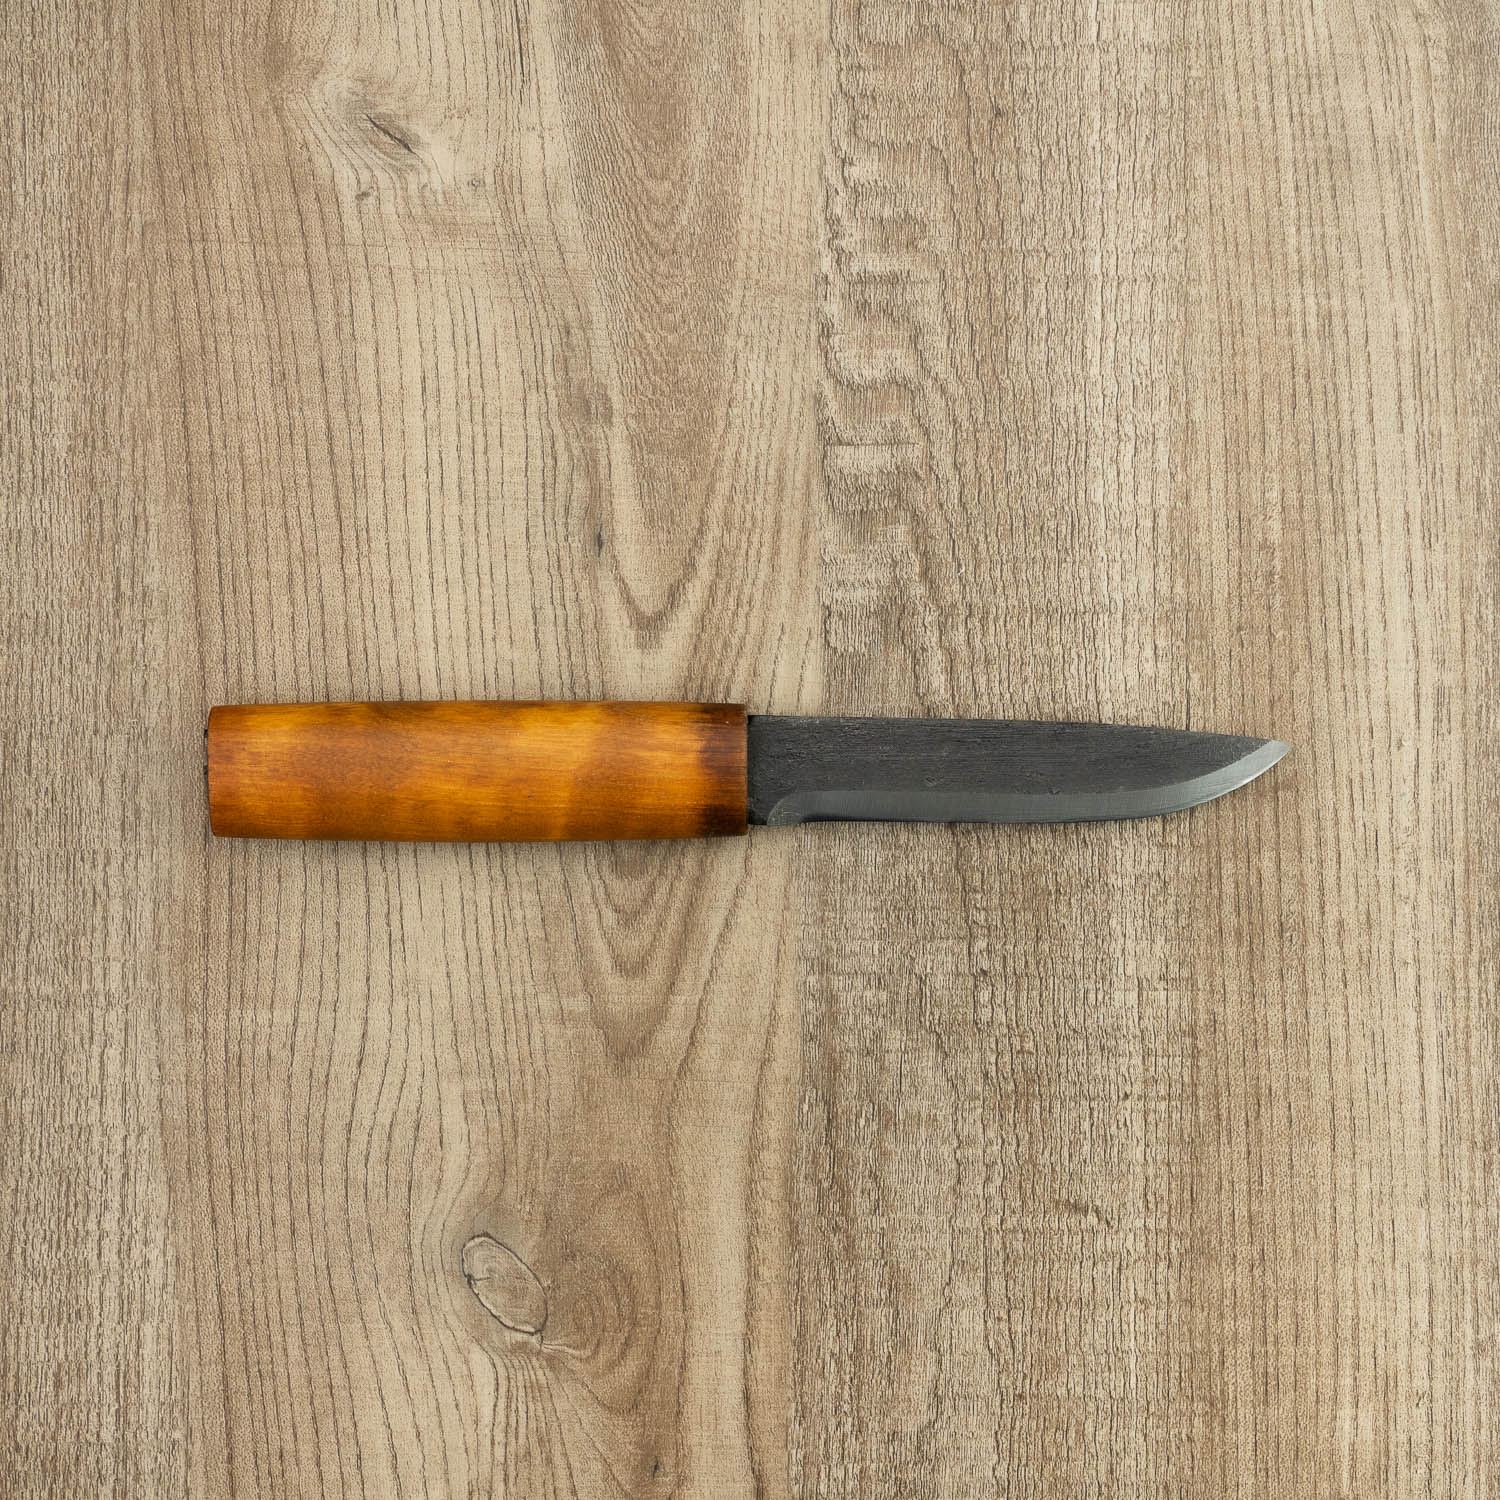 Helle Knives Viking 110mm Carbon Steel Hunting Knife